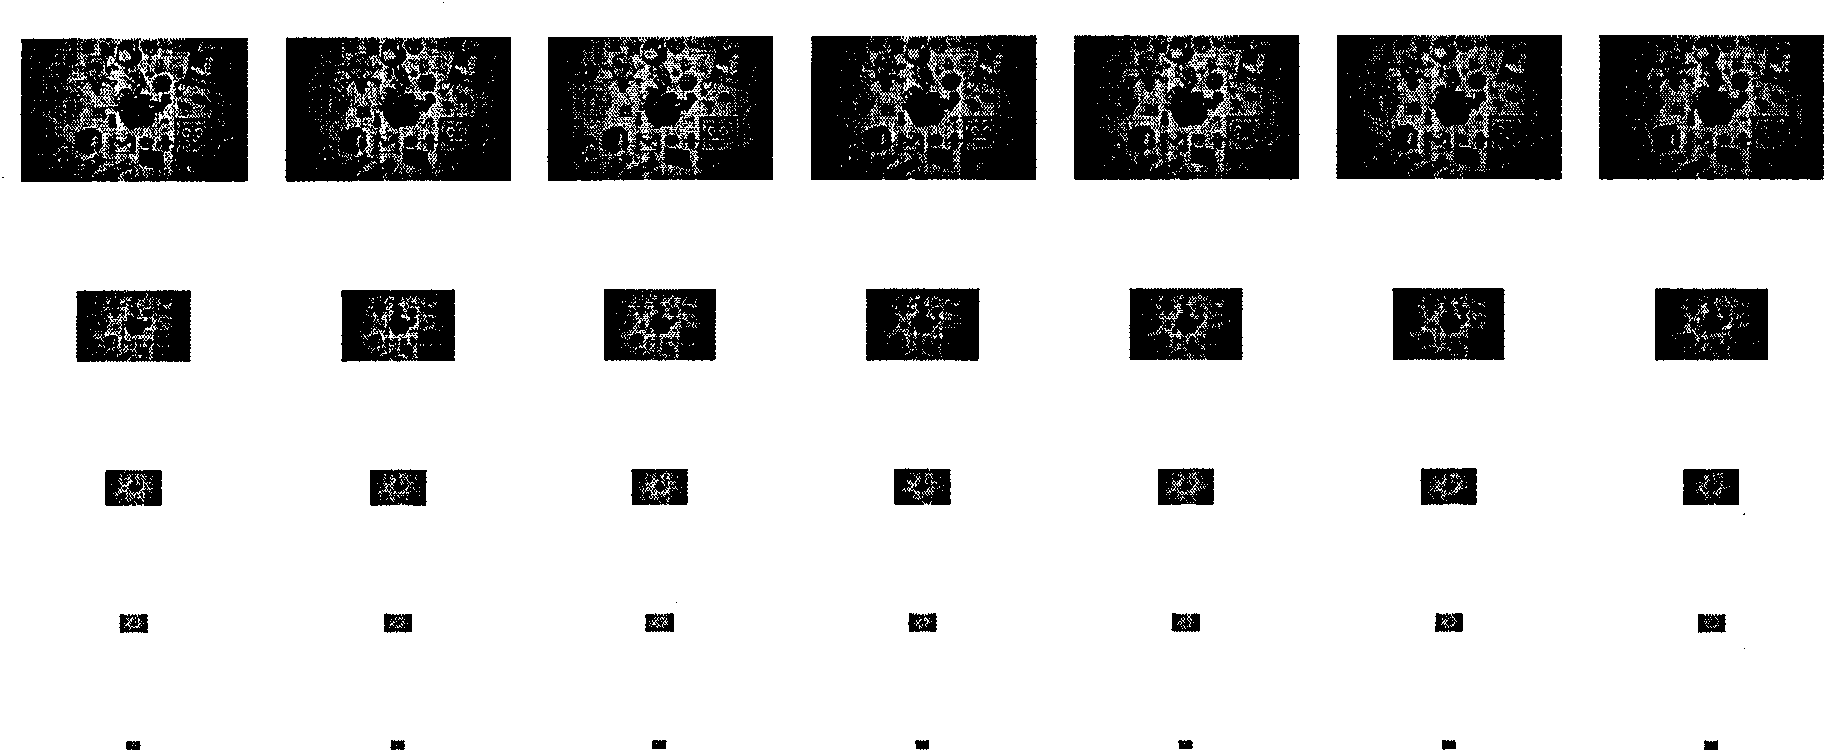 Sub-pixel characteristic point detection-based image matching method